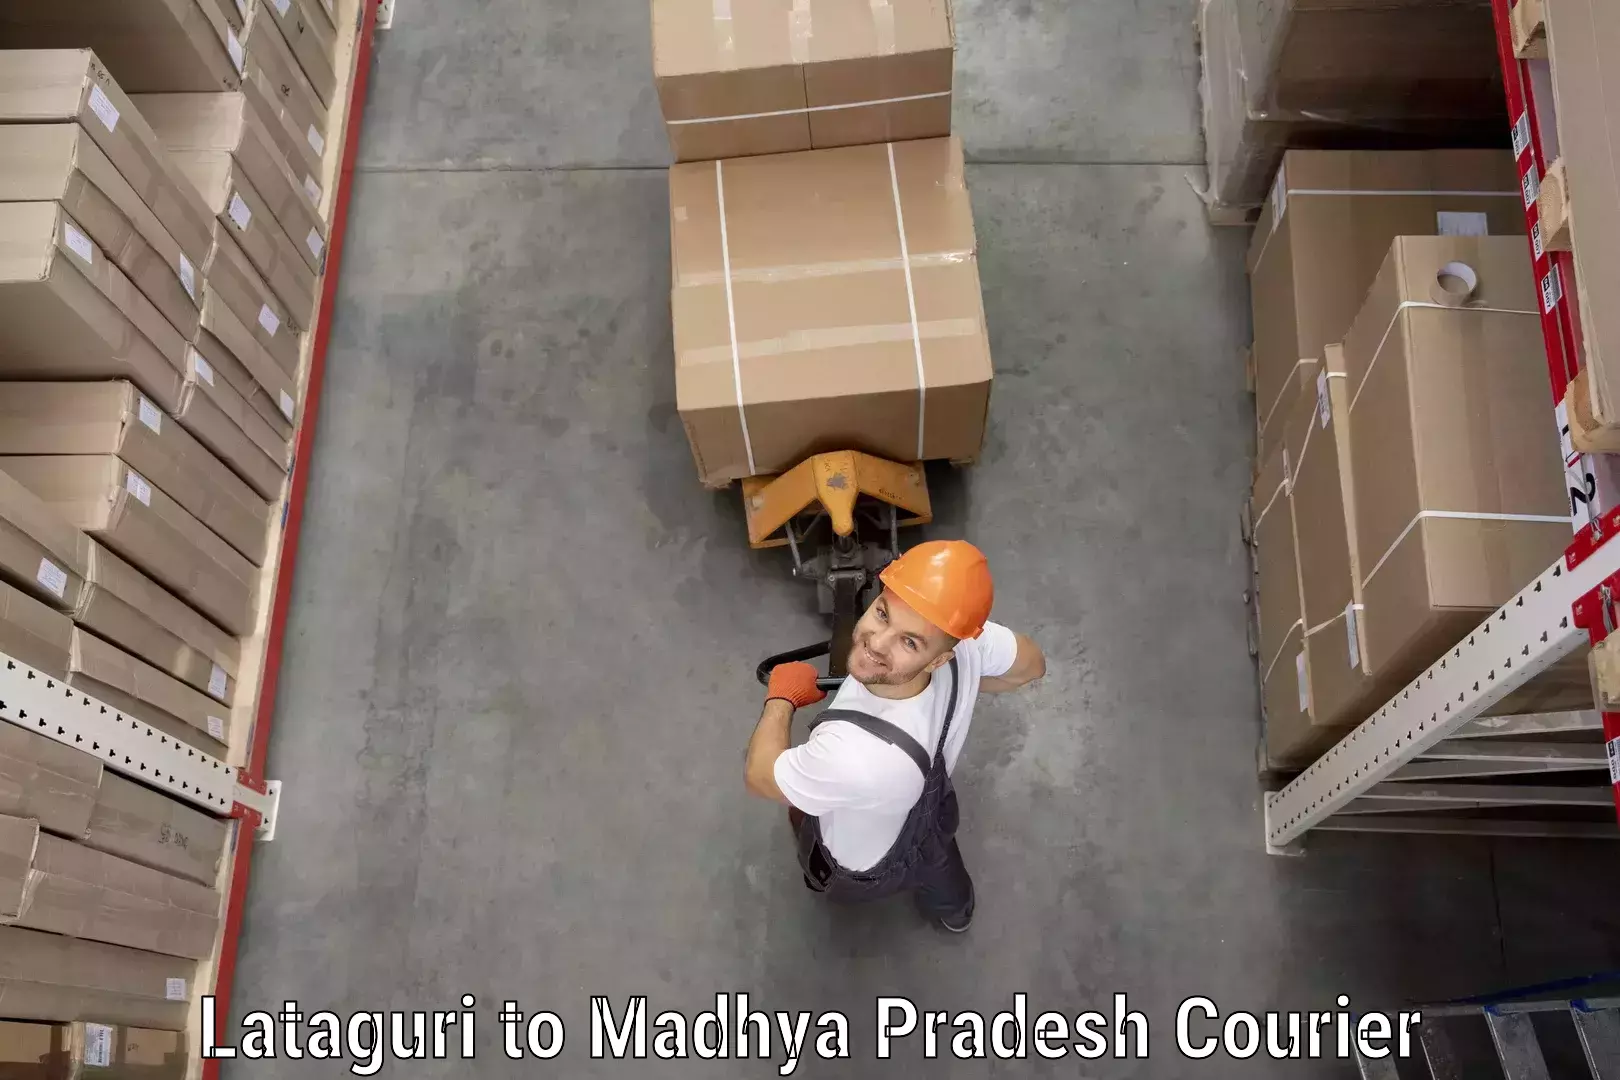 State-of-the-art courier technology Lataguri to Madhya Pradesh